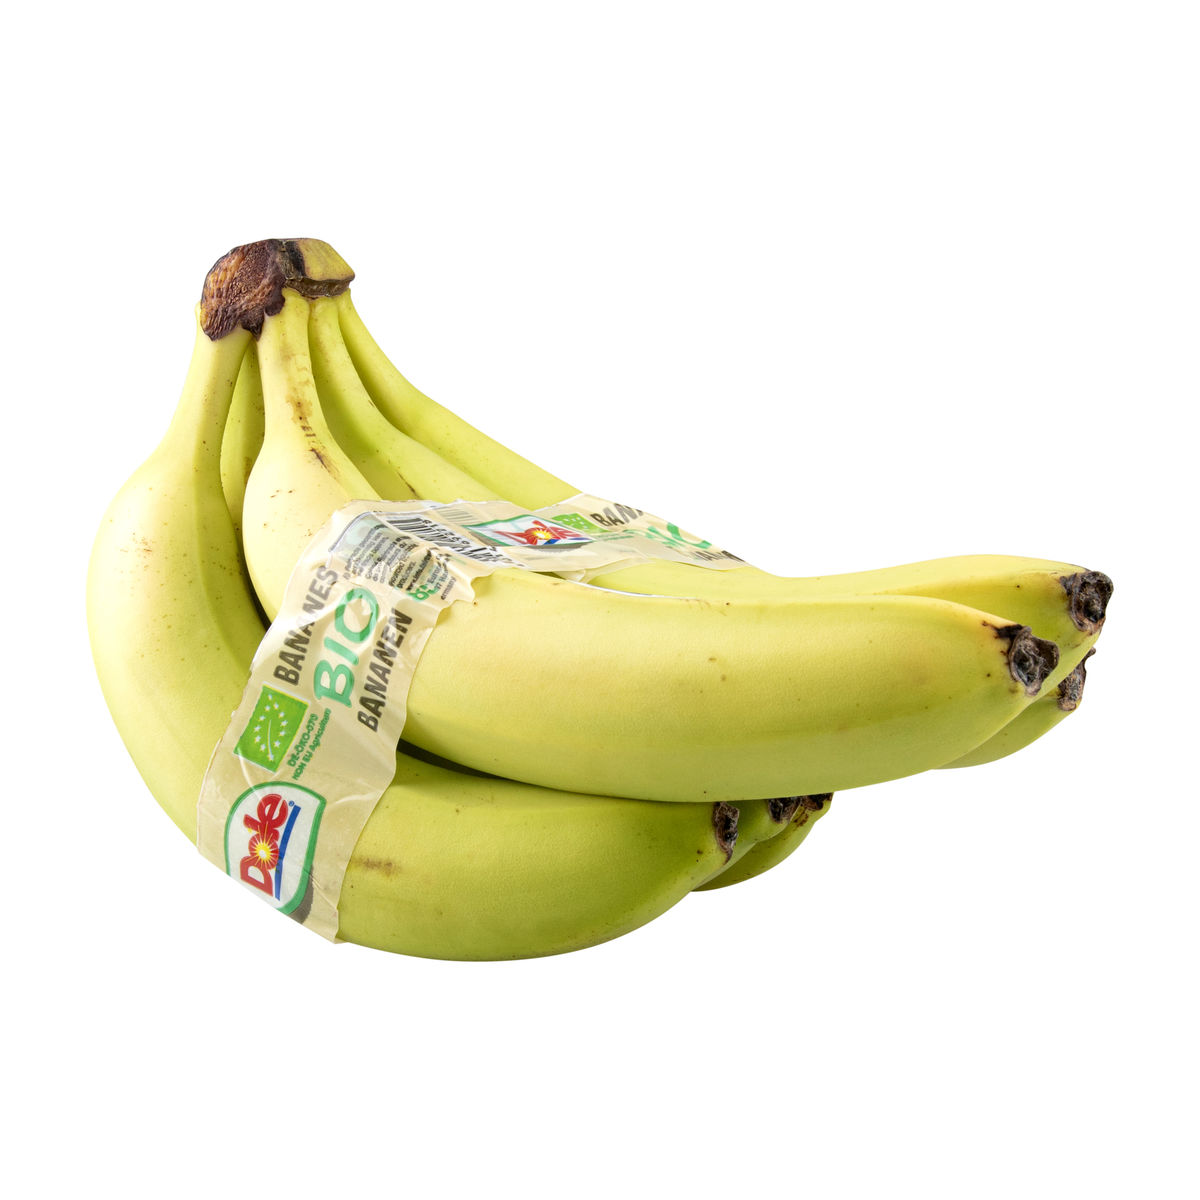 Dole Bananes Bio 850 g